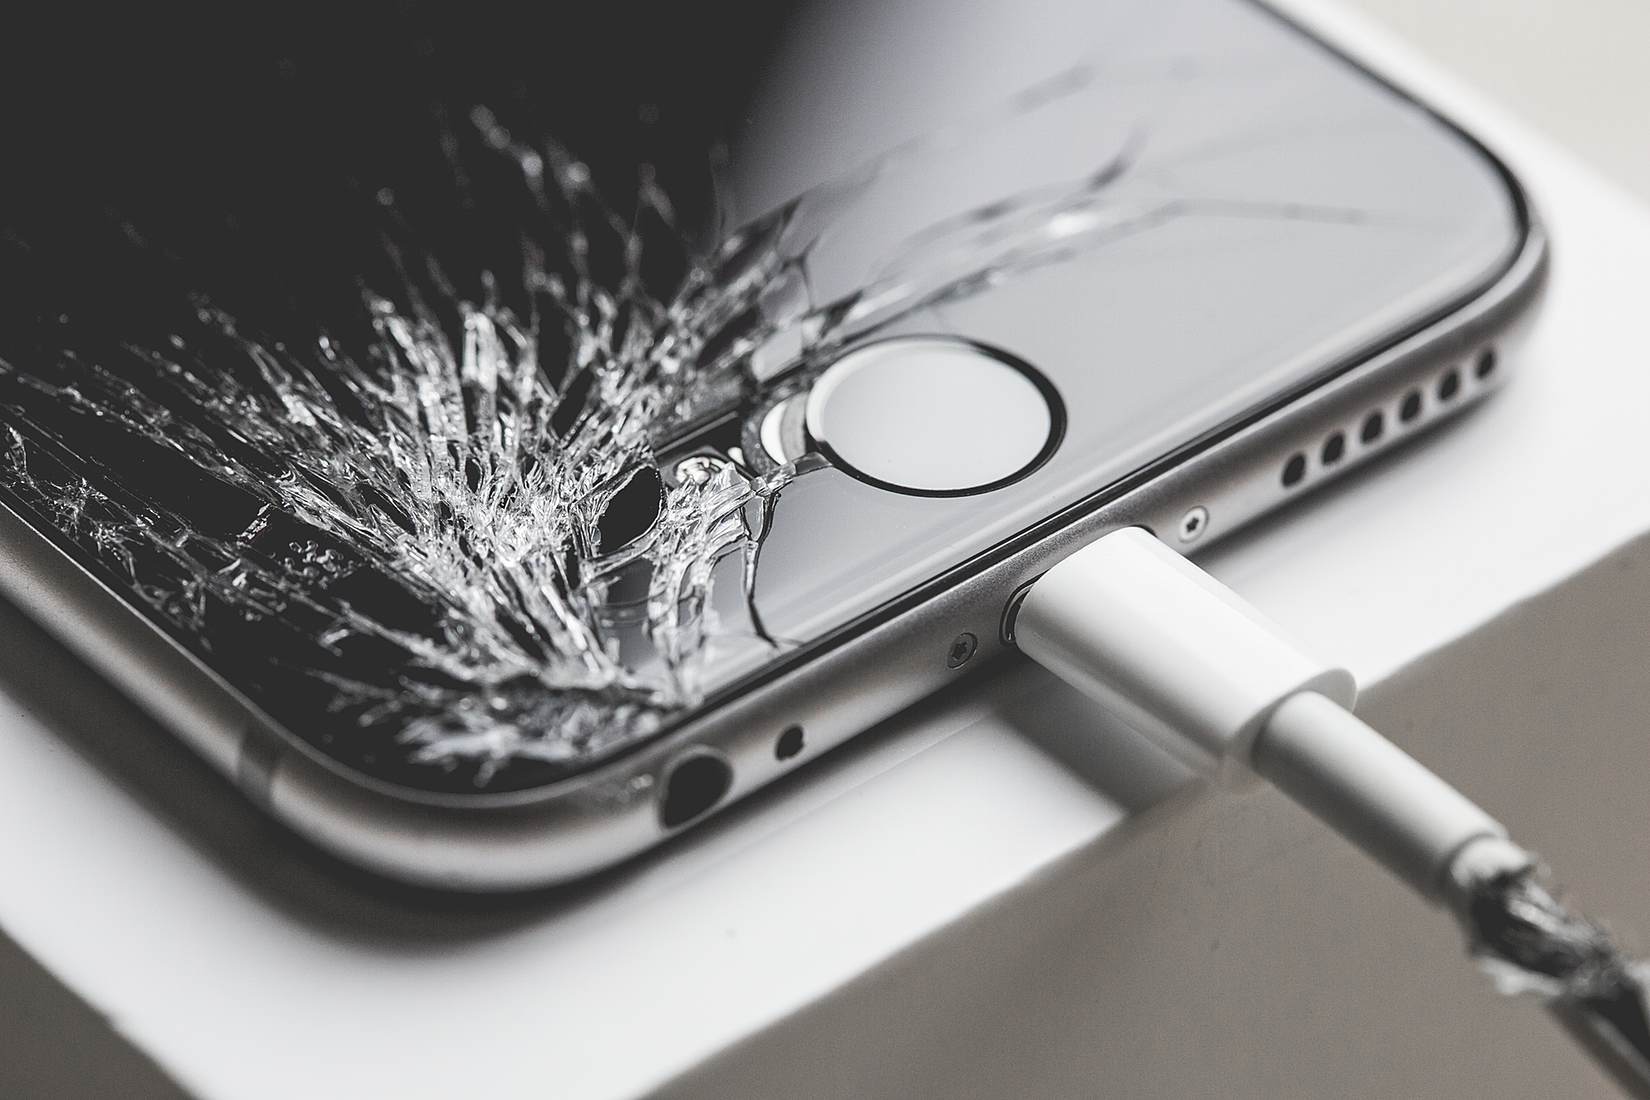 Бойня смартфонов iPhone 6: в Британии разбили десятки гаджетов (видео)